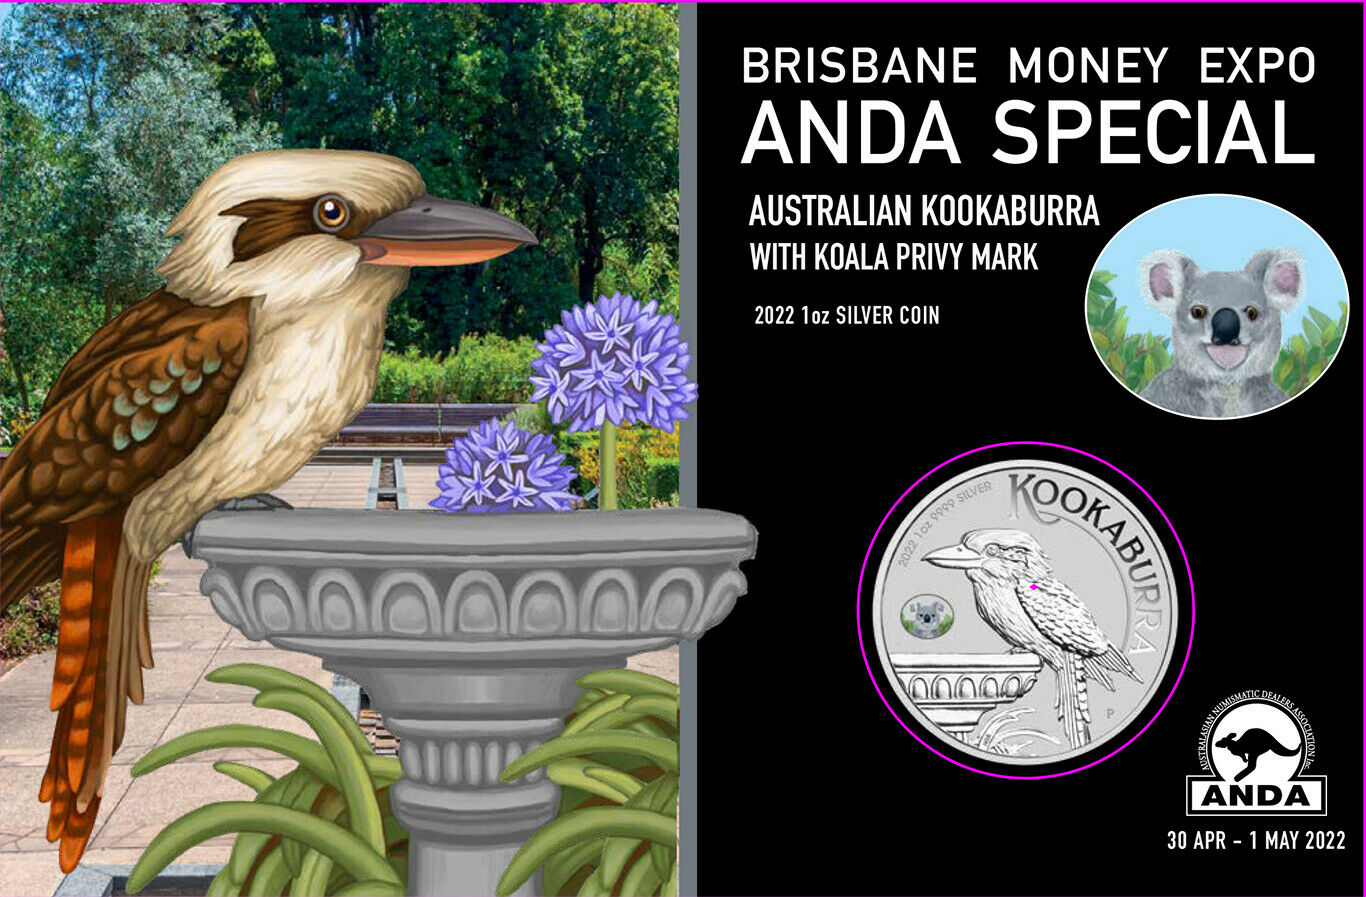 Thumbnail for 2022 Australian Kookaburra 1oz Silver Coin with Koala Privy Mark Brisbane ANDA Money Expo